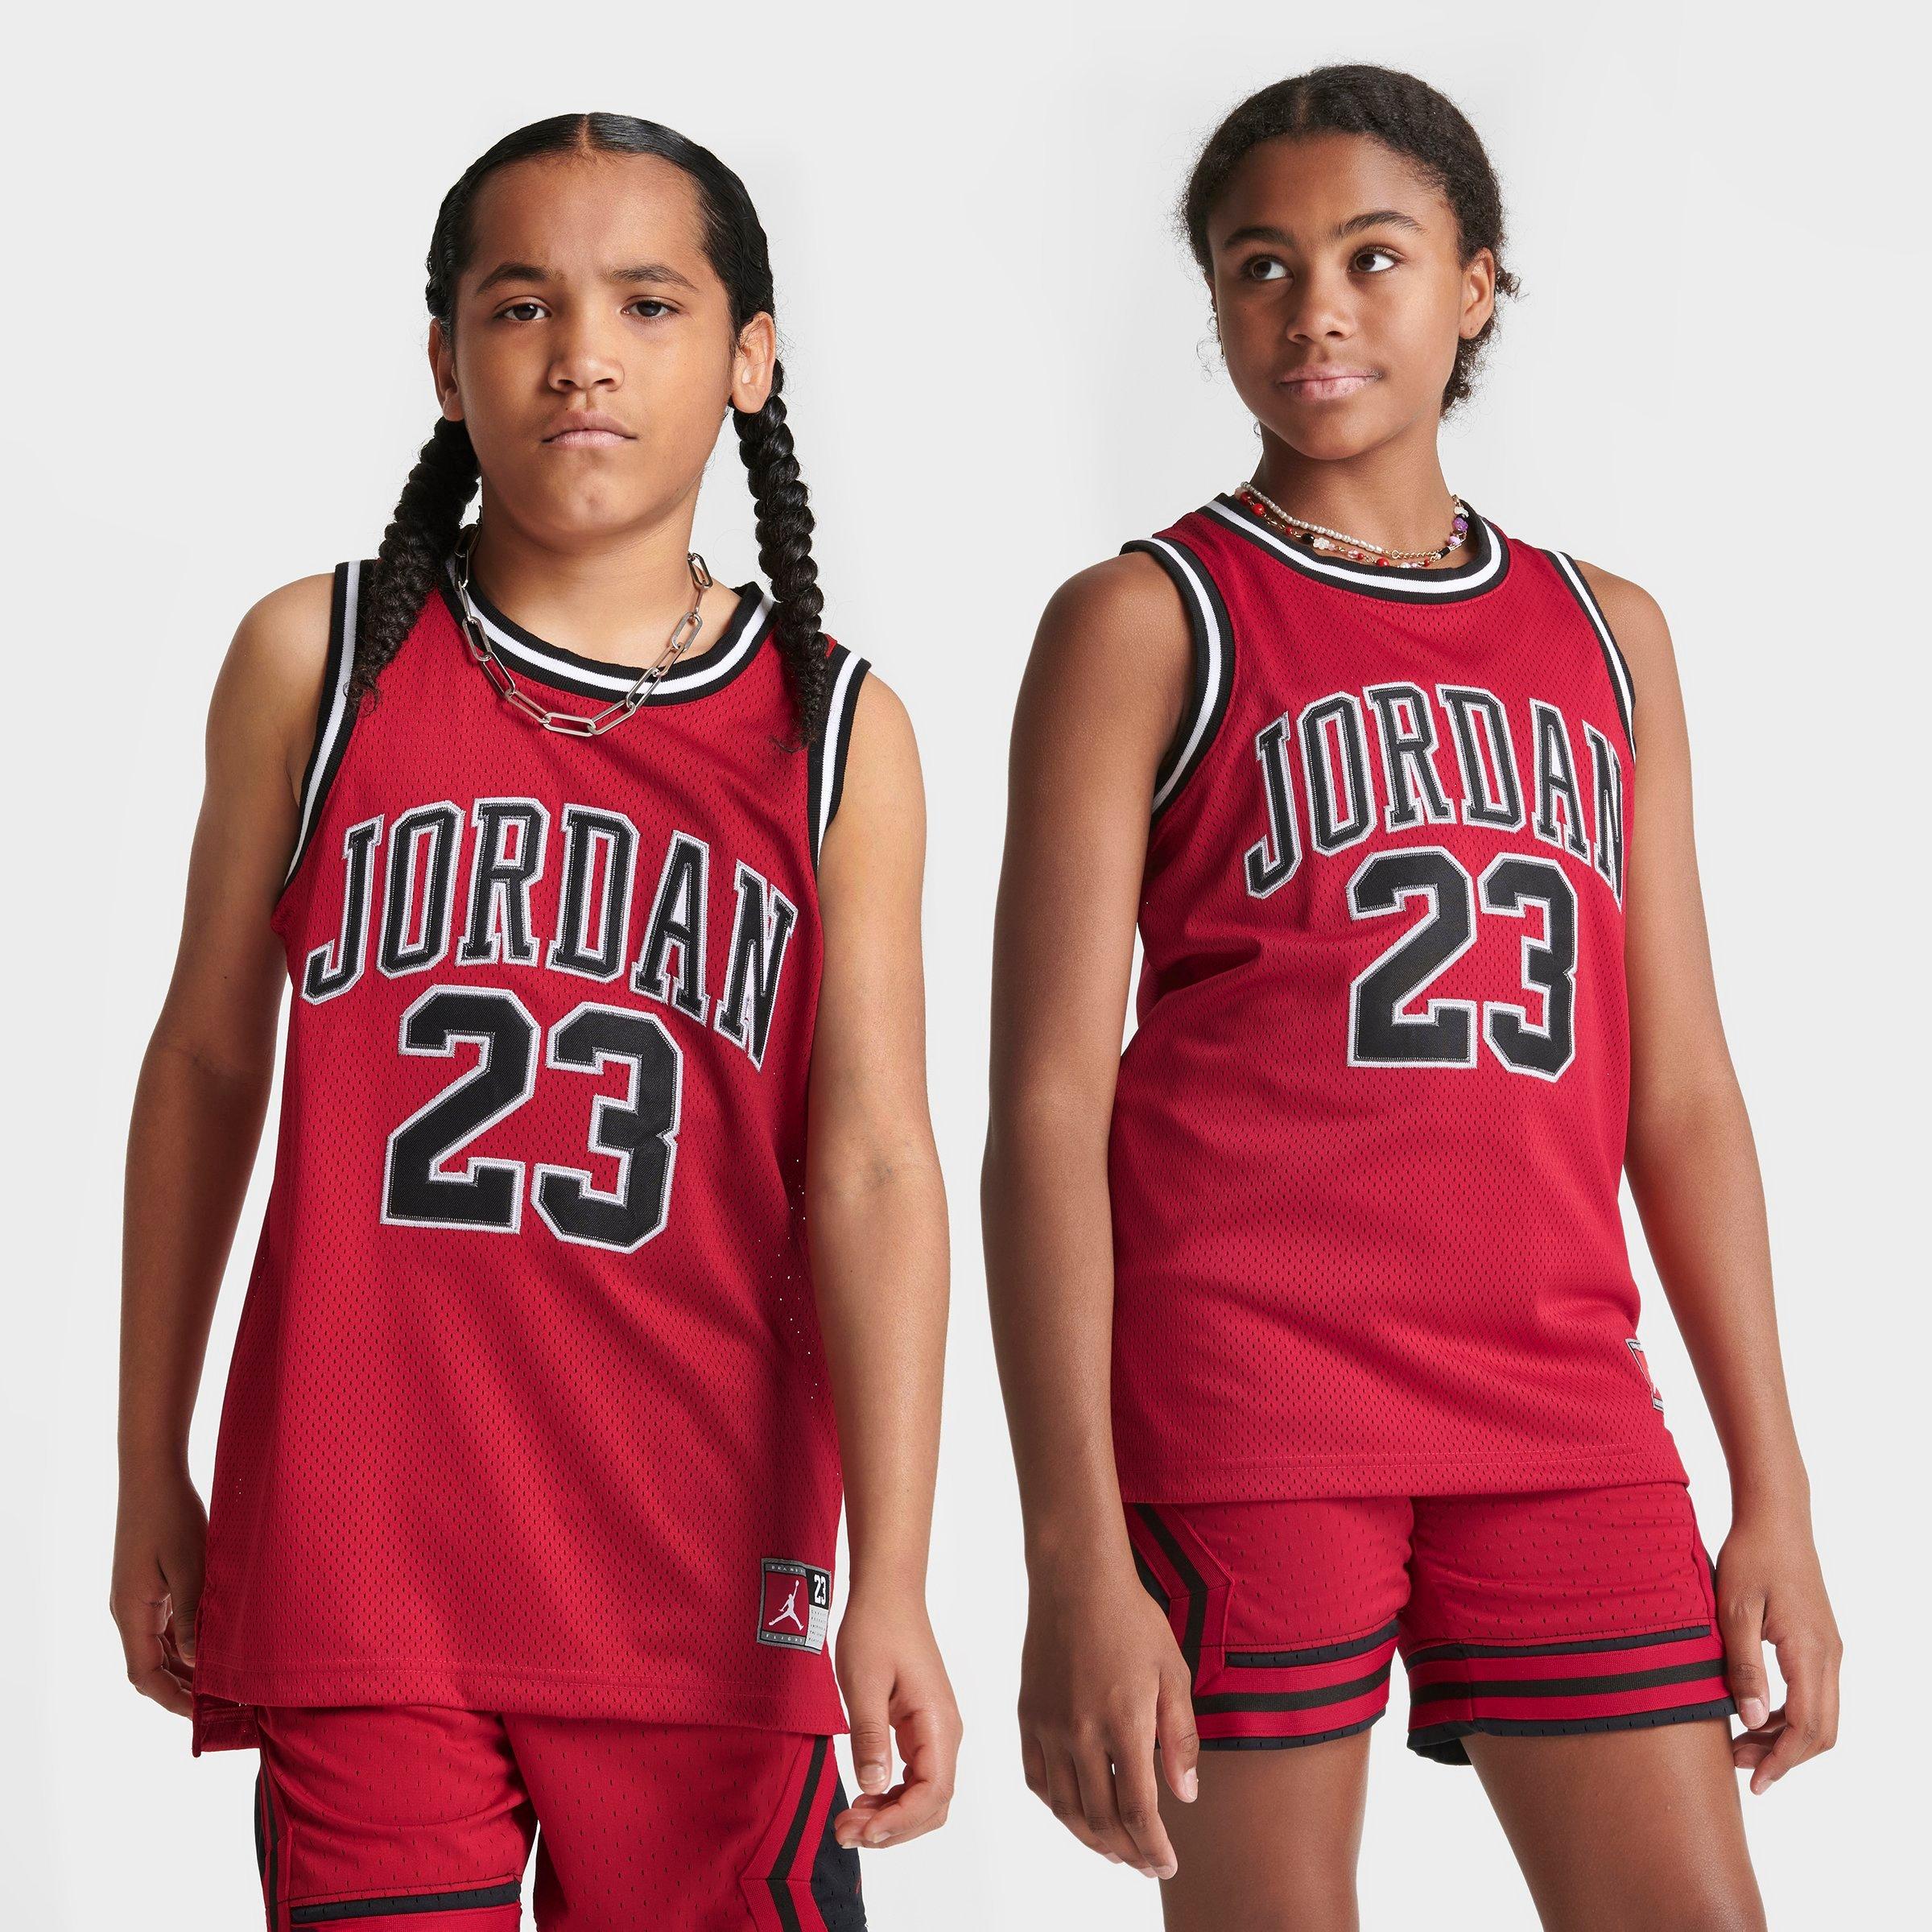 Kids Jordan 23 Jersey Sleeveless Top - Black - 95A773-023